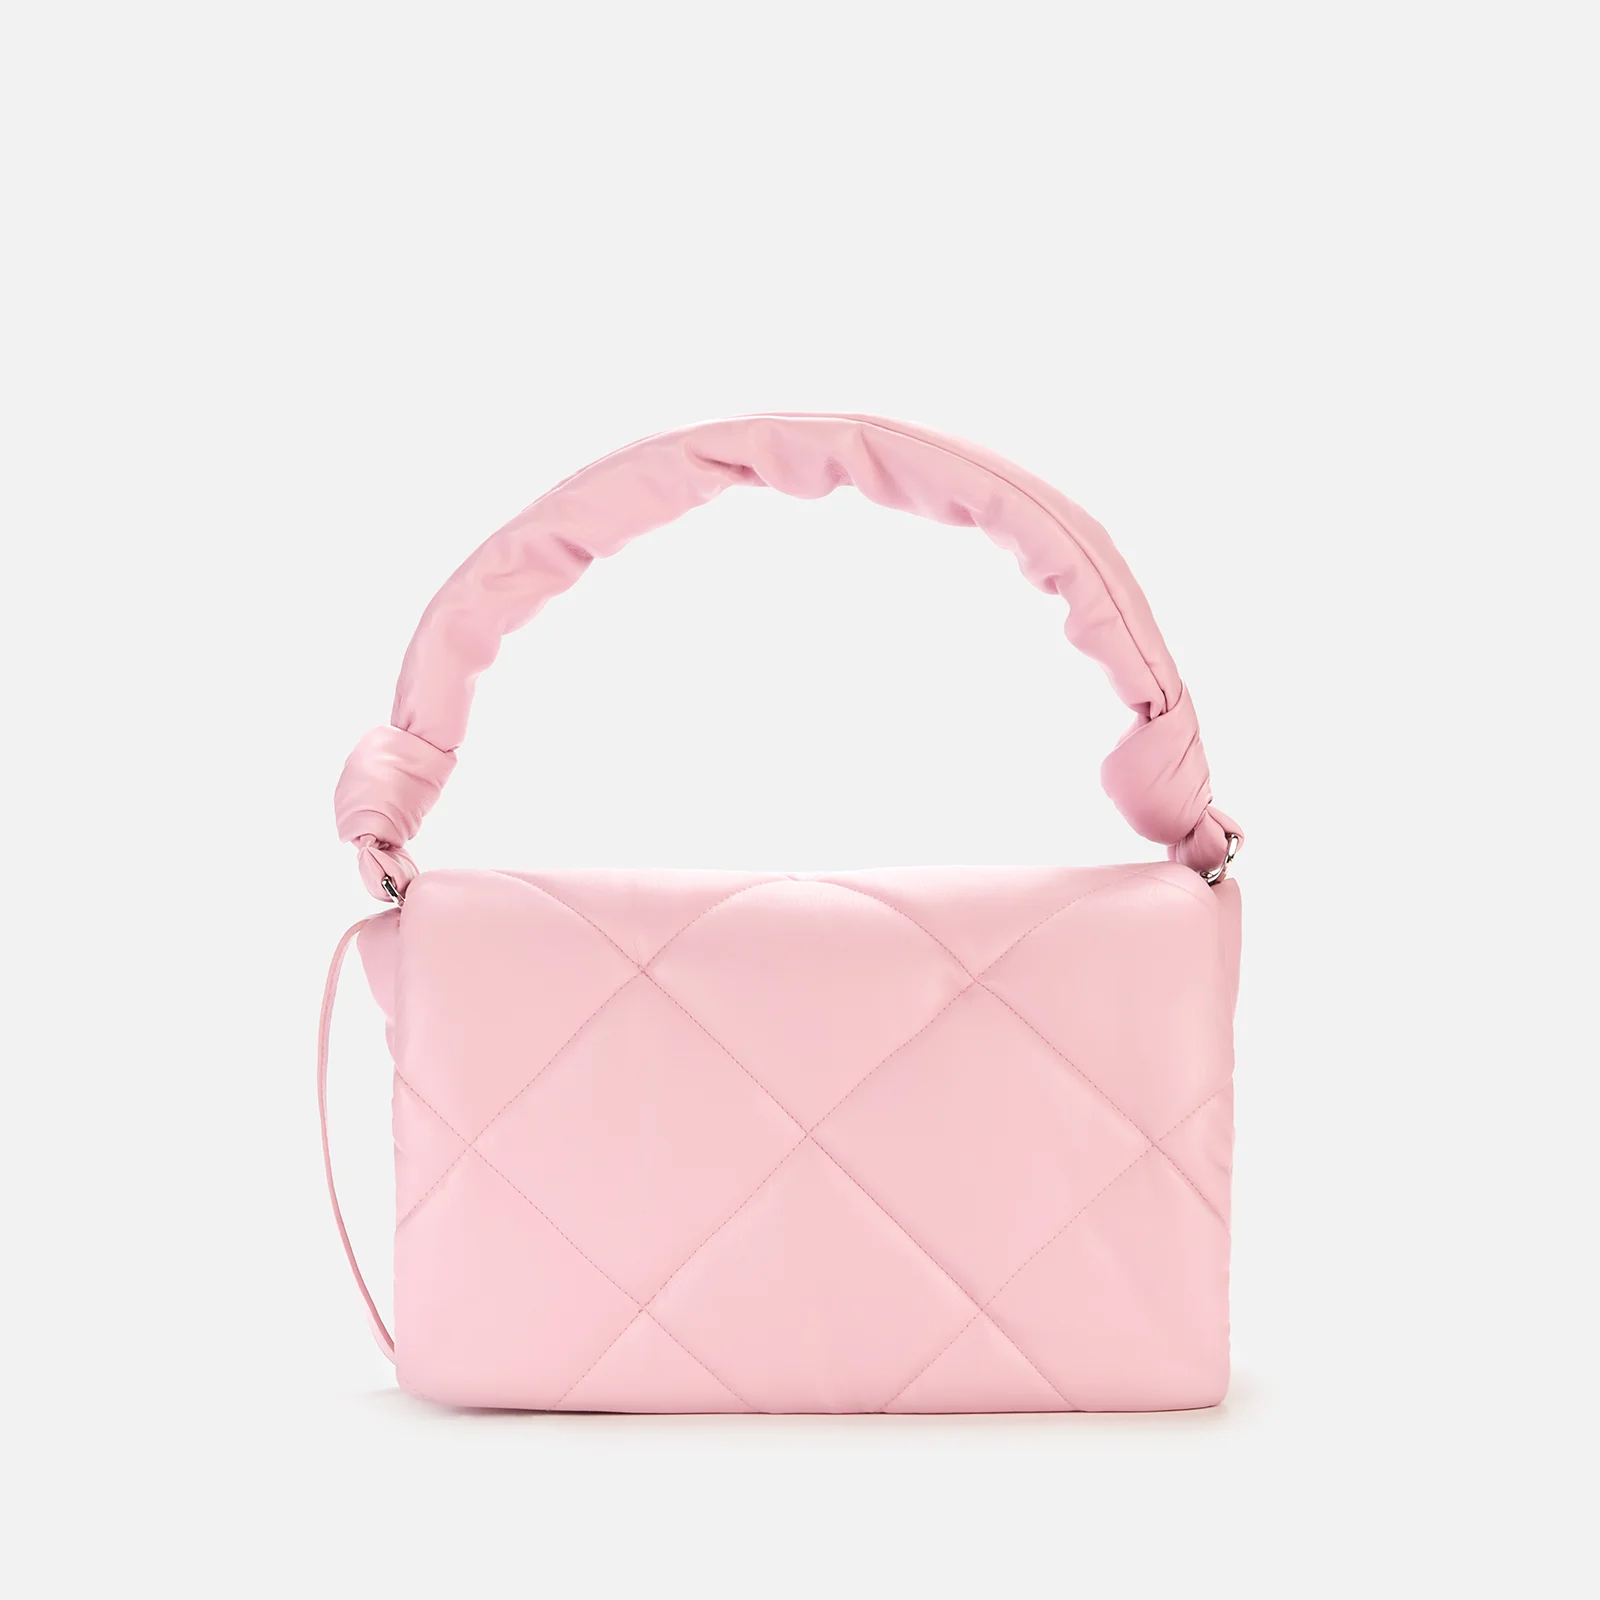 Stand Studio Women's Wanda Mini Bag - Bubblegum Pink Image 1